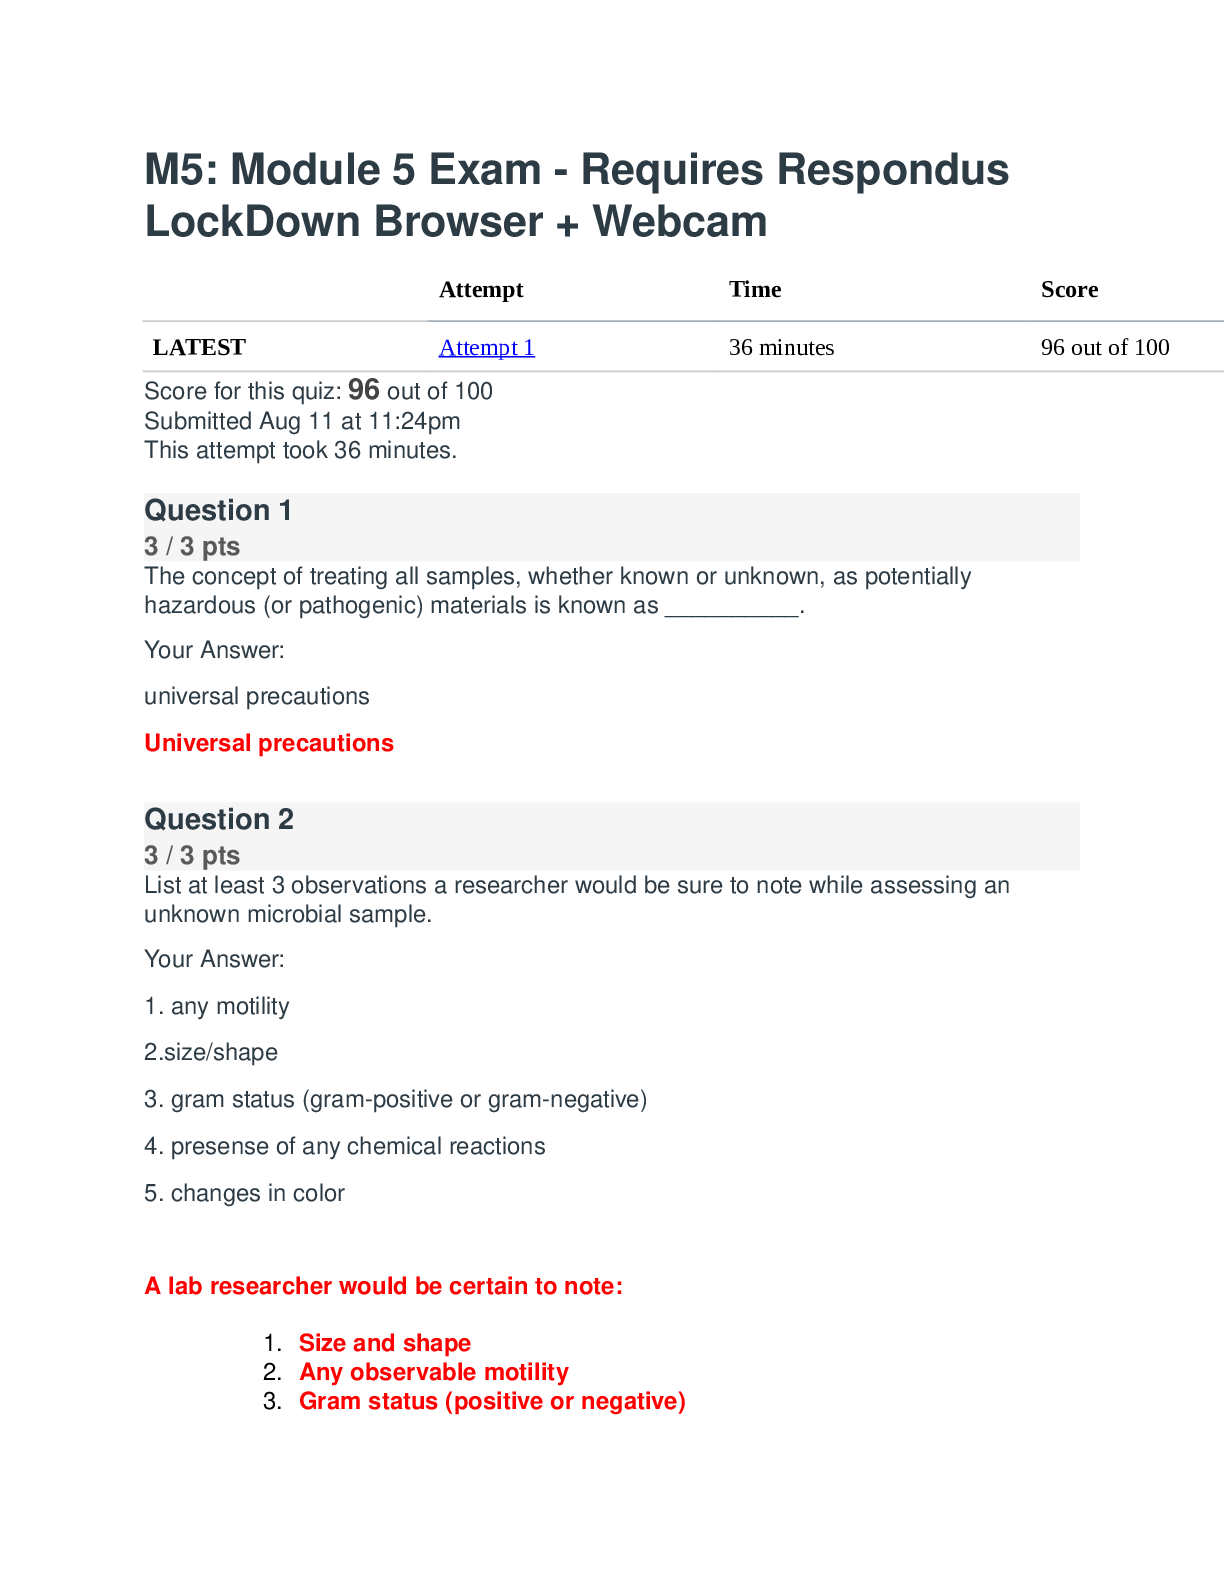 Module 5 Exam - Bio 171 Requires Respondus LockDown Browser...